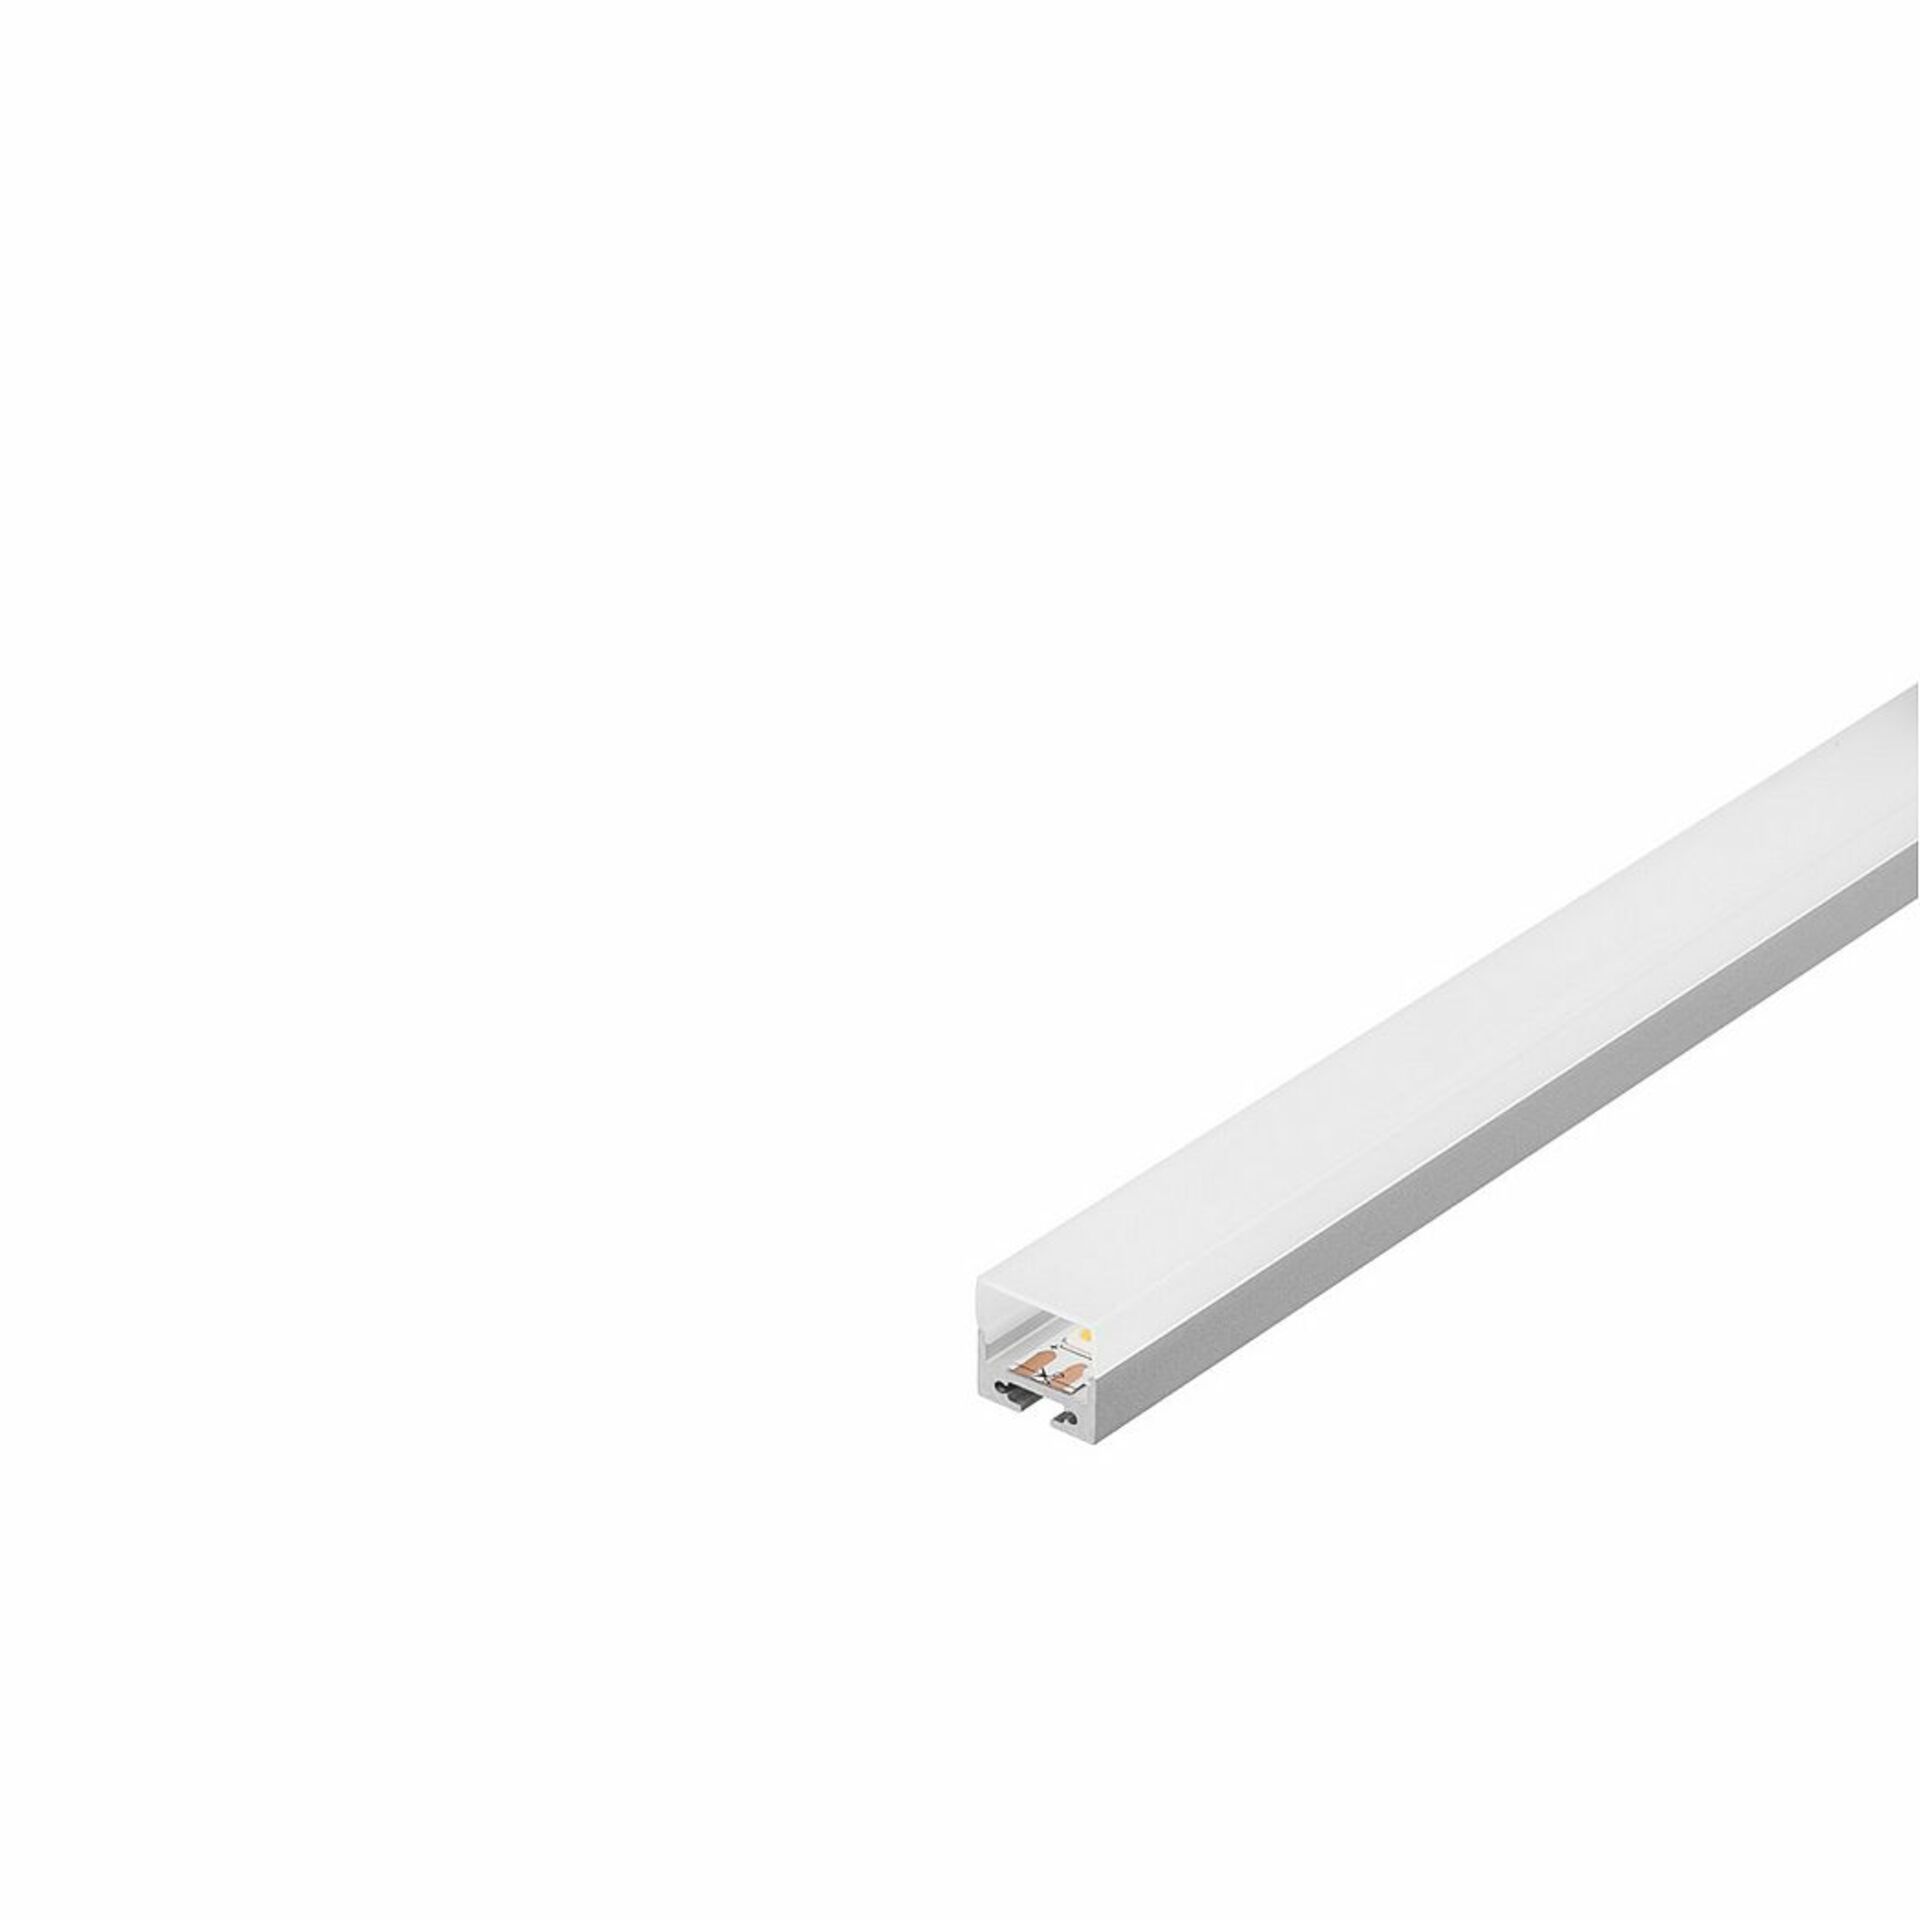 SLV BIG WHITE GLENOS, profesionální profil 2020, eloxovaný hliník, 1 m, s bílým krytem 213434